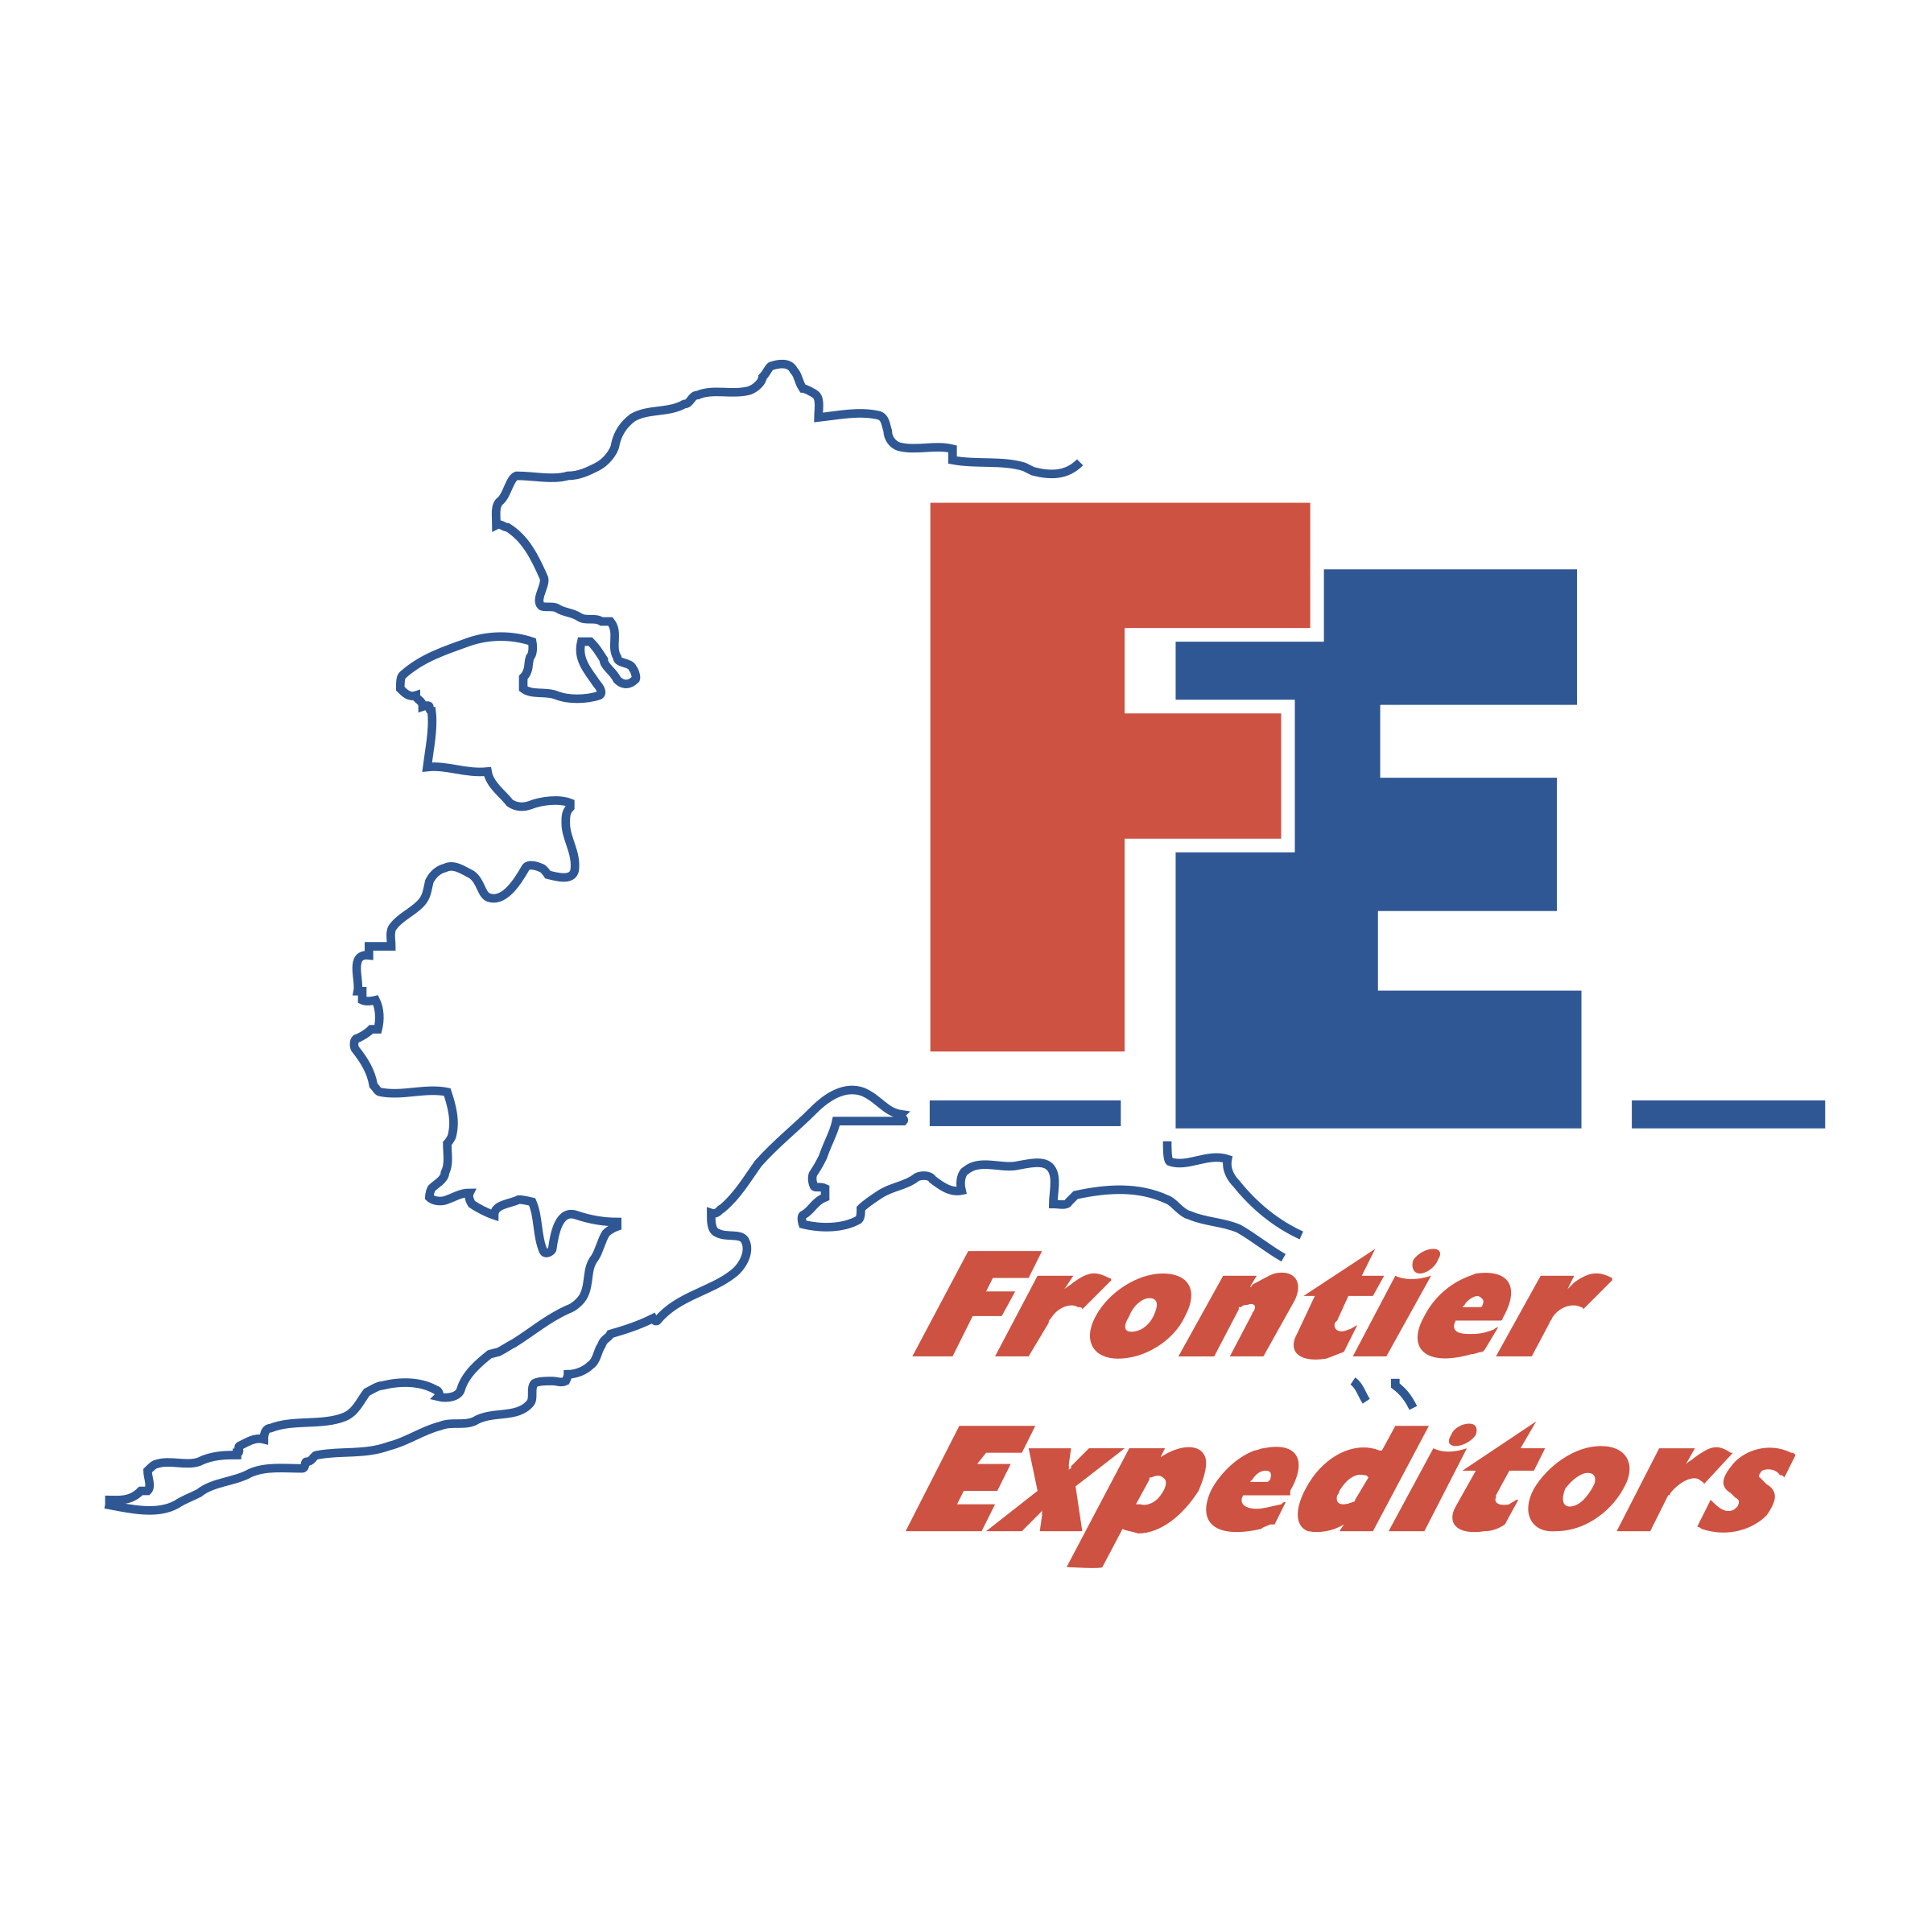 Expeditors Logo - FE Frontier Expeditors Logo PNG Transparent & SVG Vector - Freebie ...